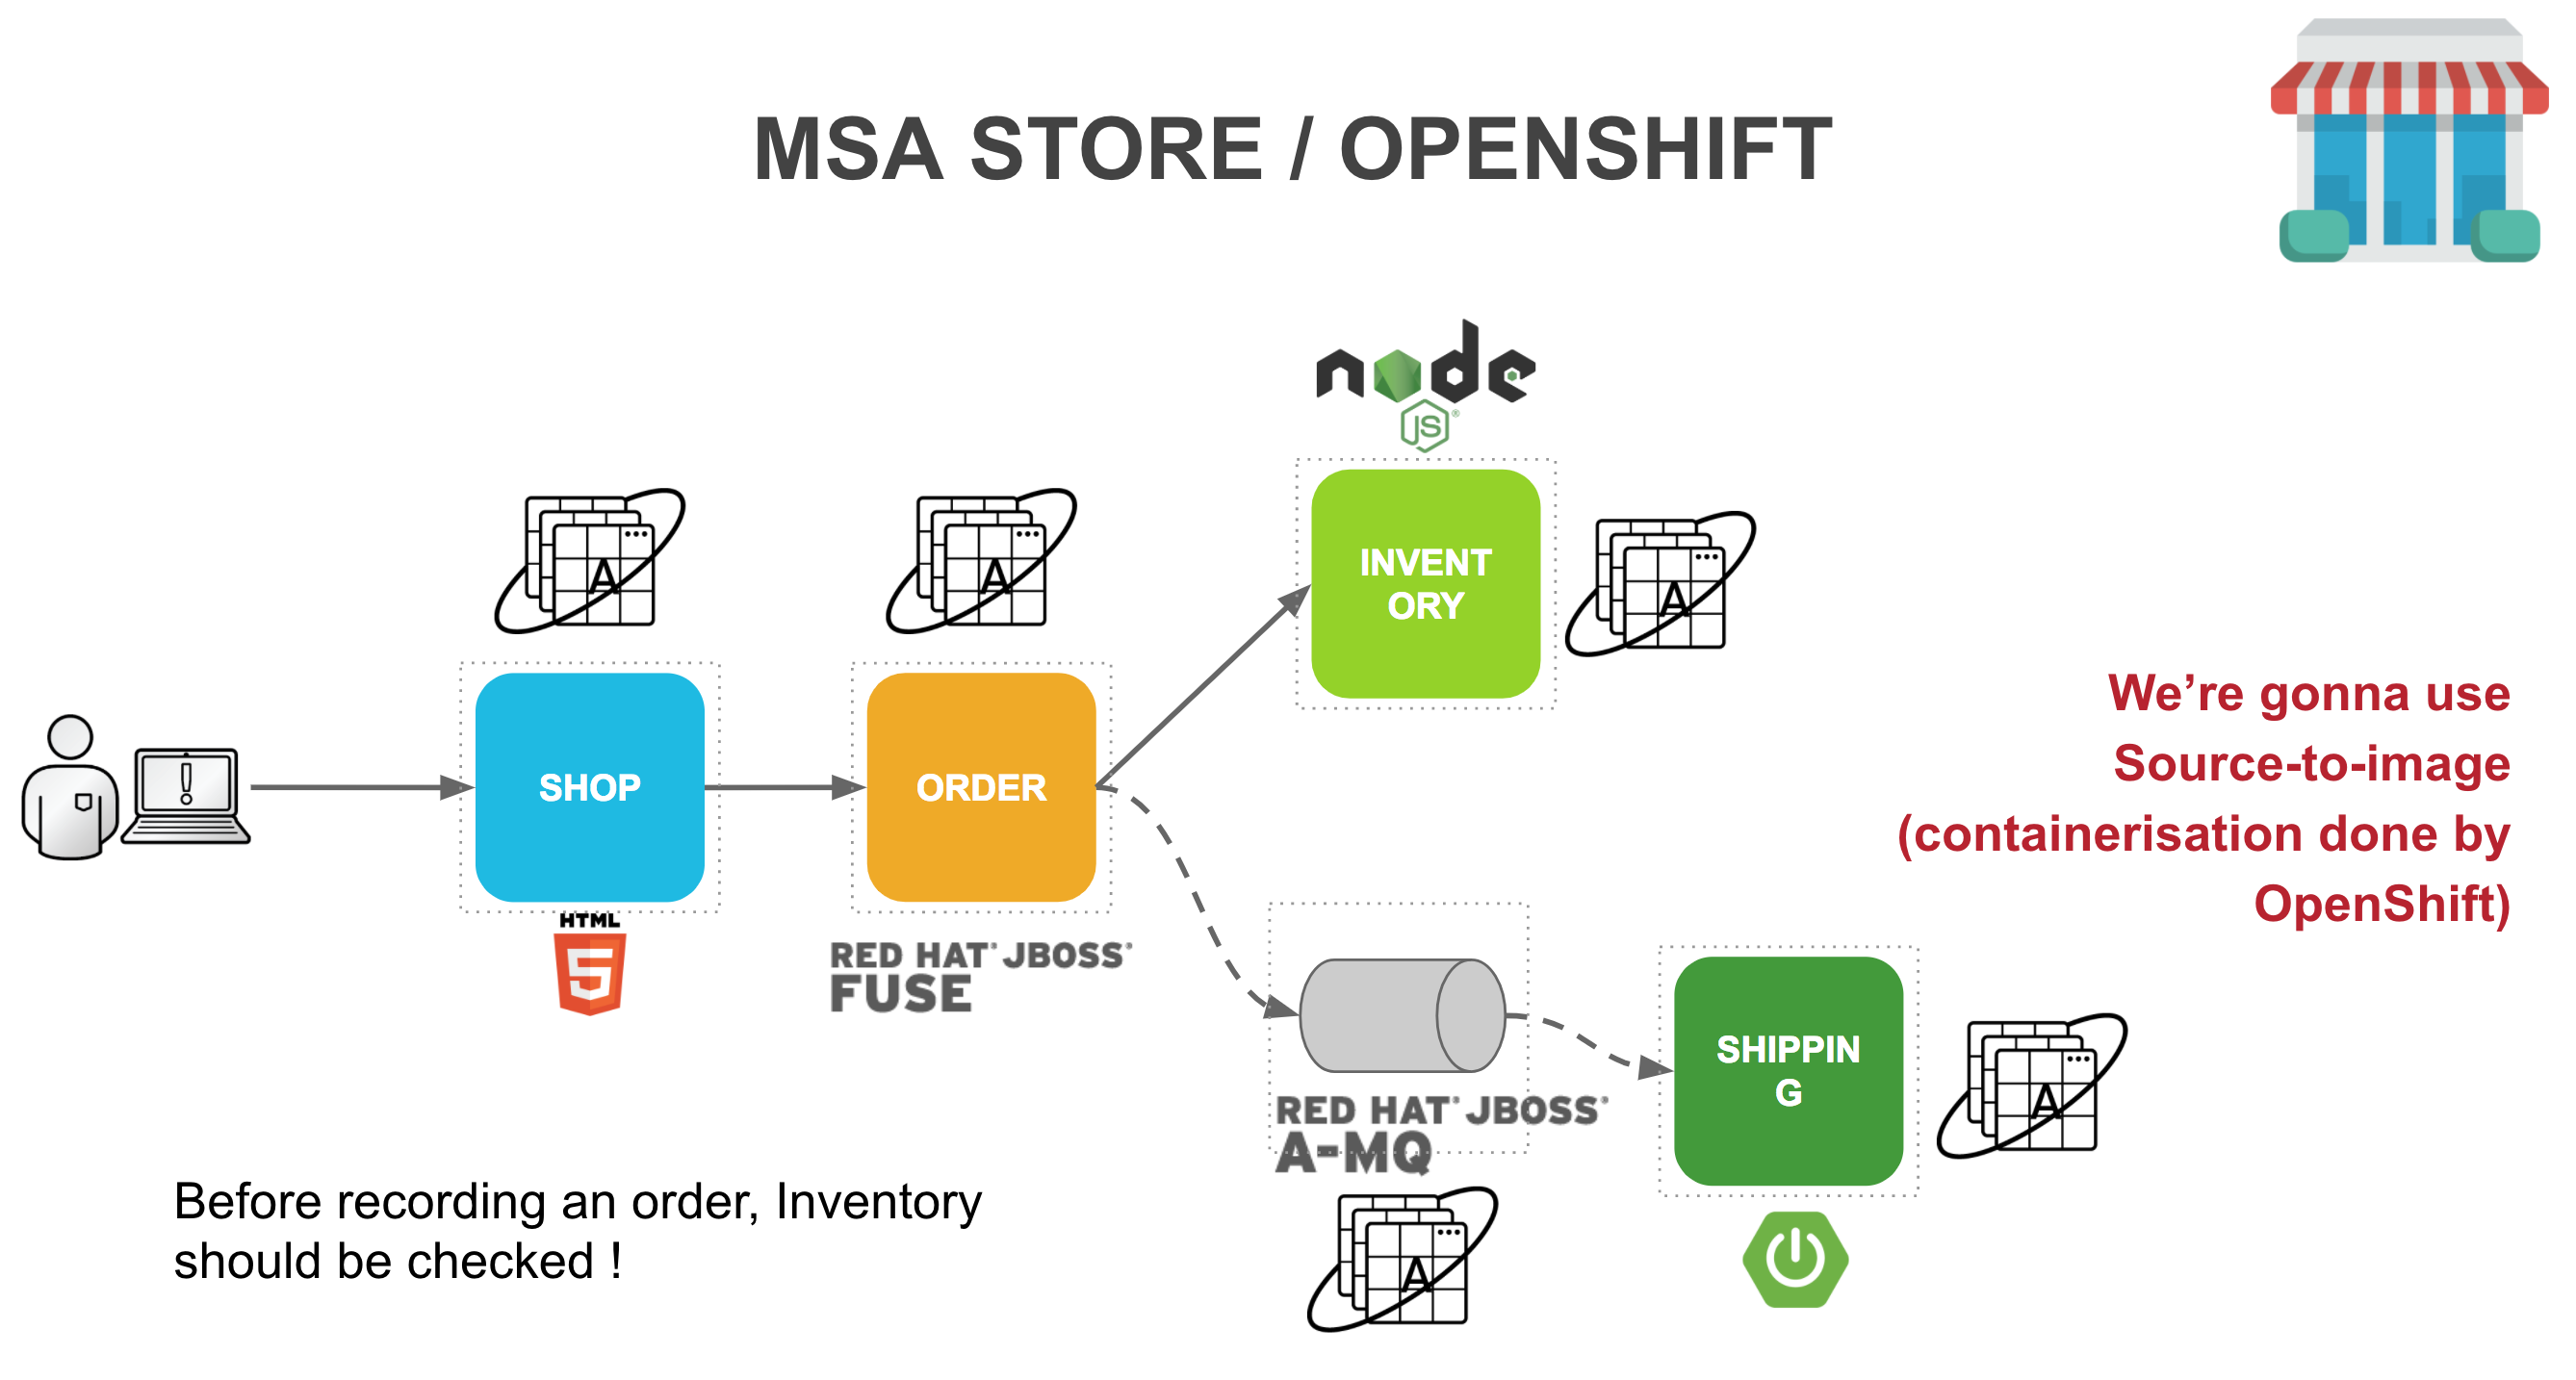 GitHub - lbroudoux/openshift-msa-store 